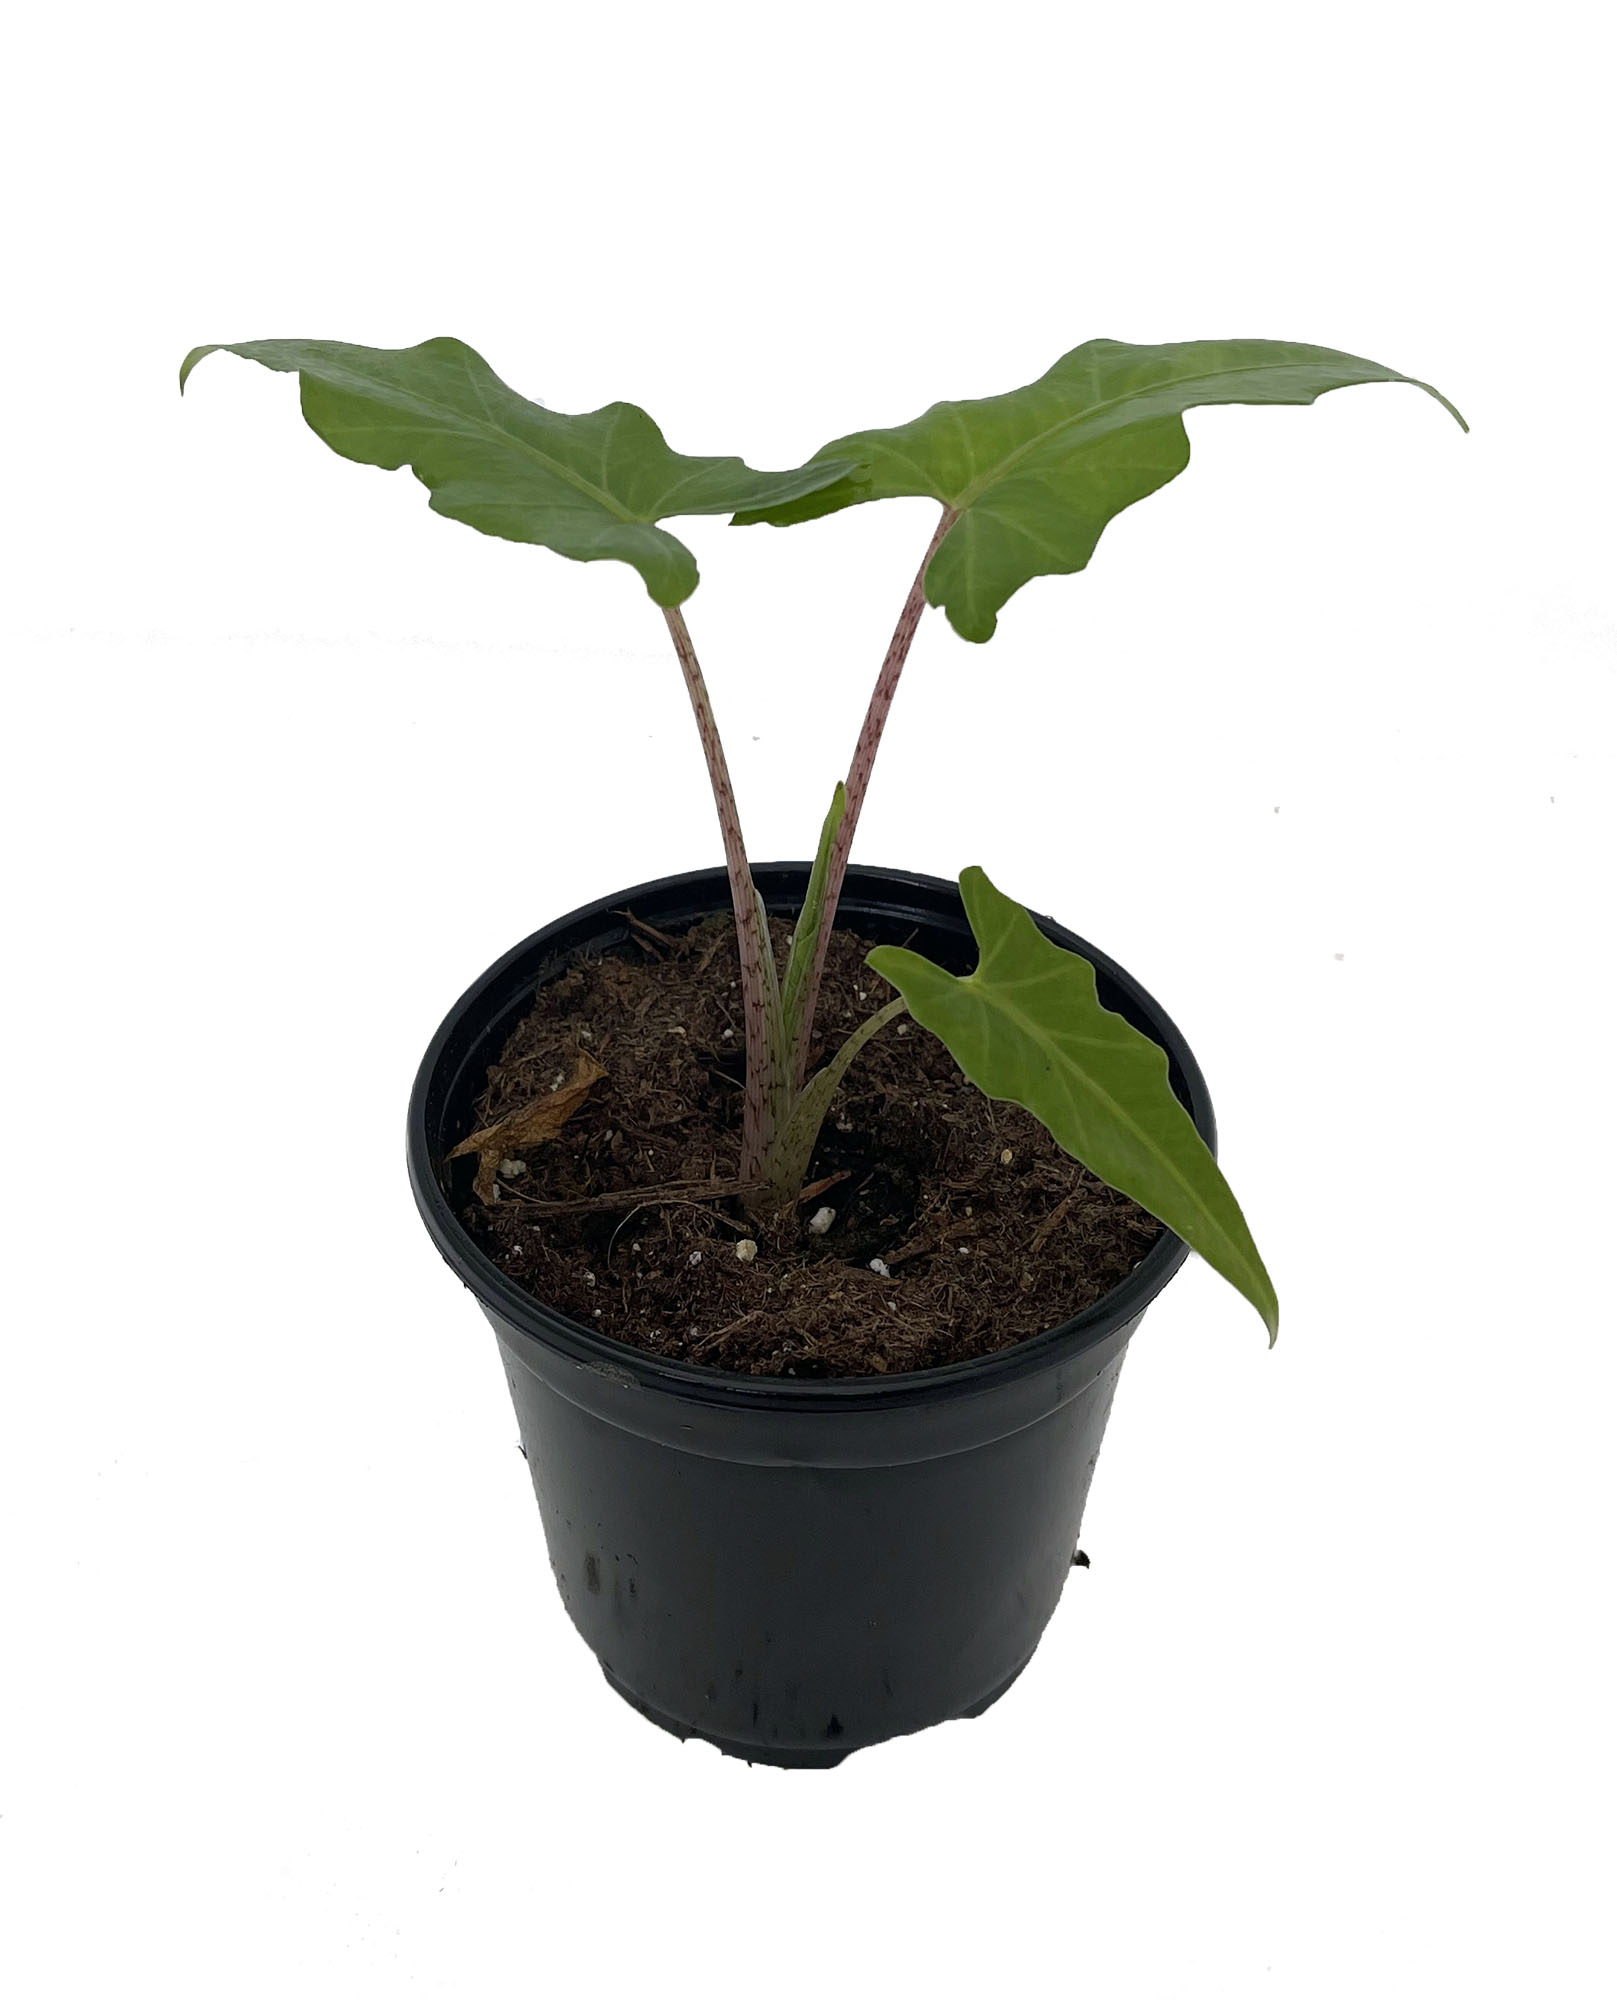 Boa African Mask Plant - Alocasia Boa - Houseplant - 4" - Hirt's Gardens